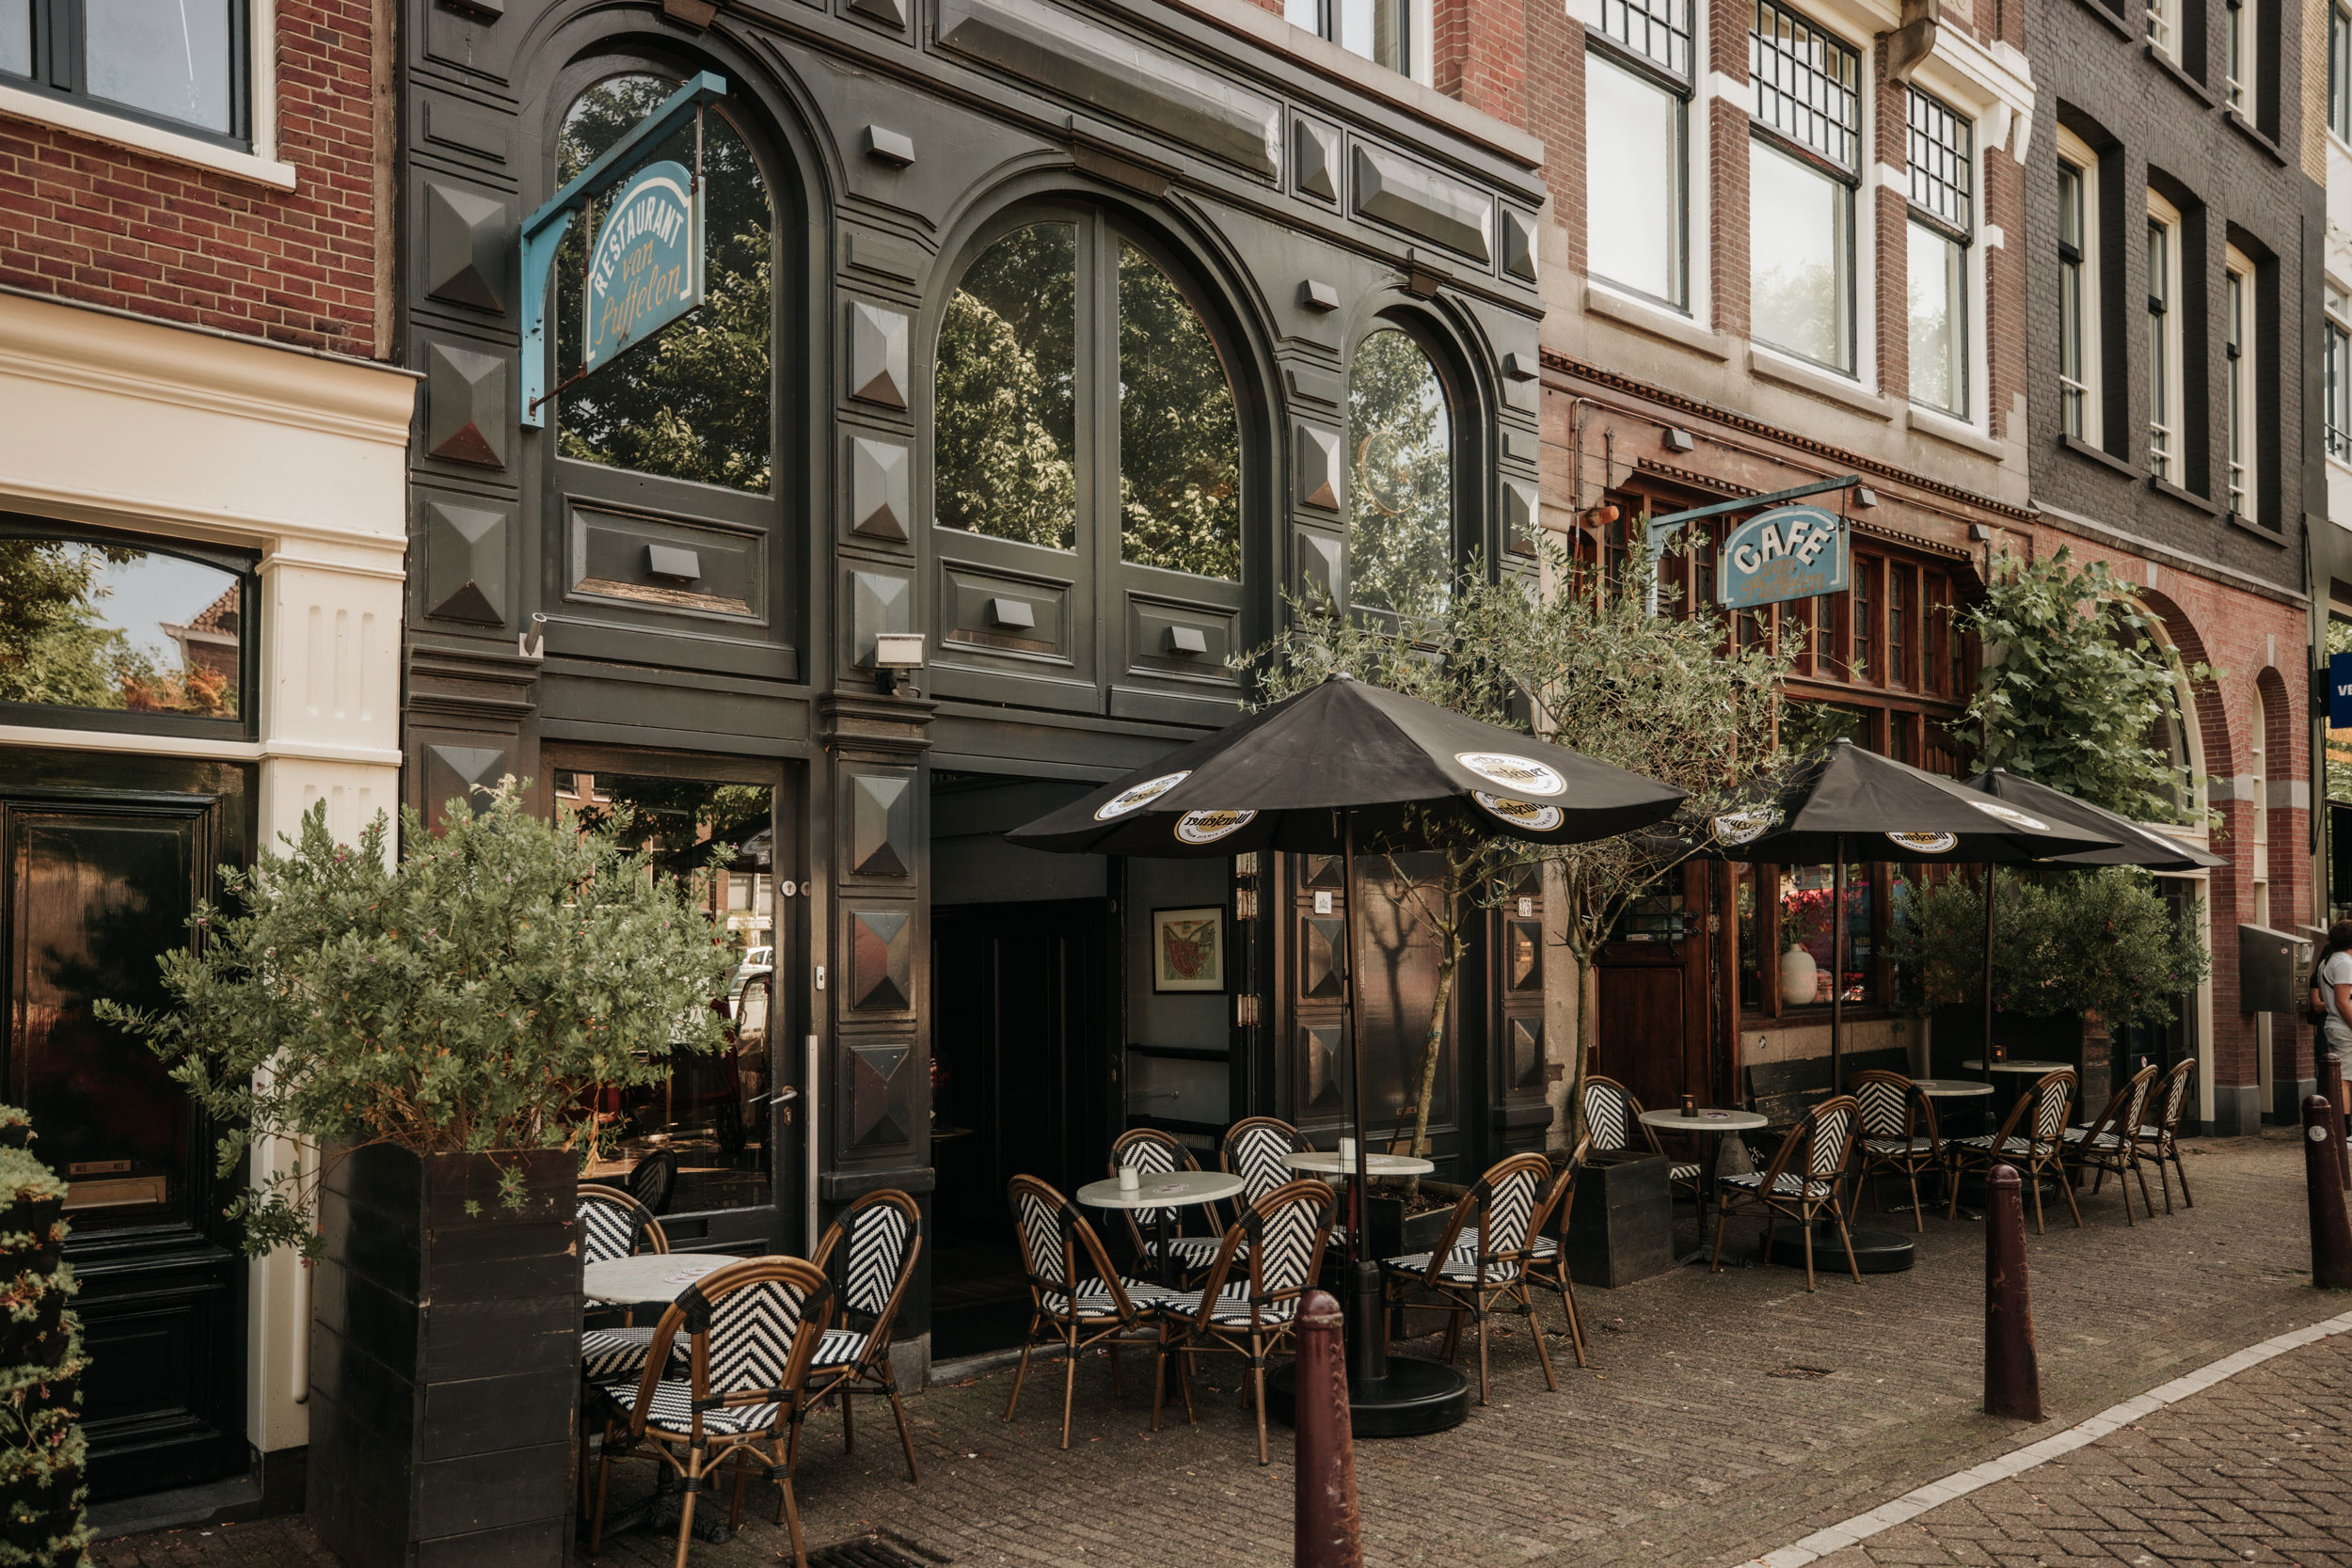 Cafe Restaurant van Puffelen terras Prinsengracht Amsterdam canals